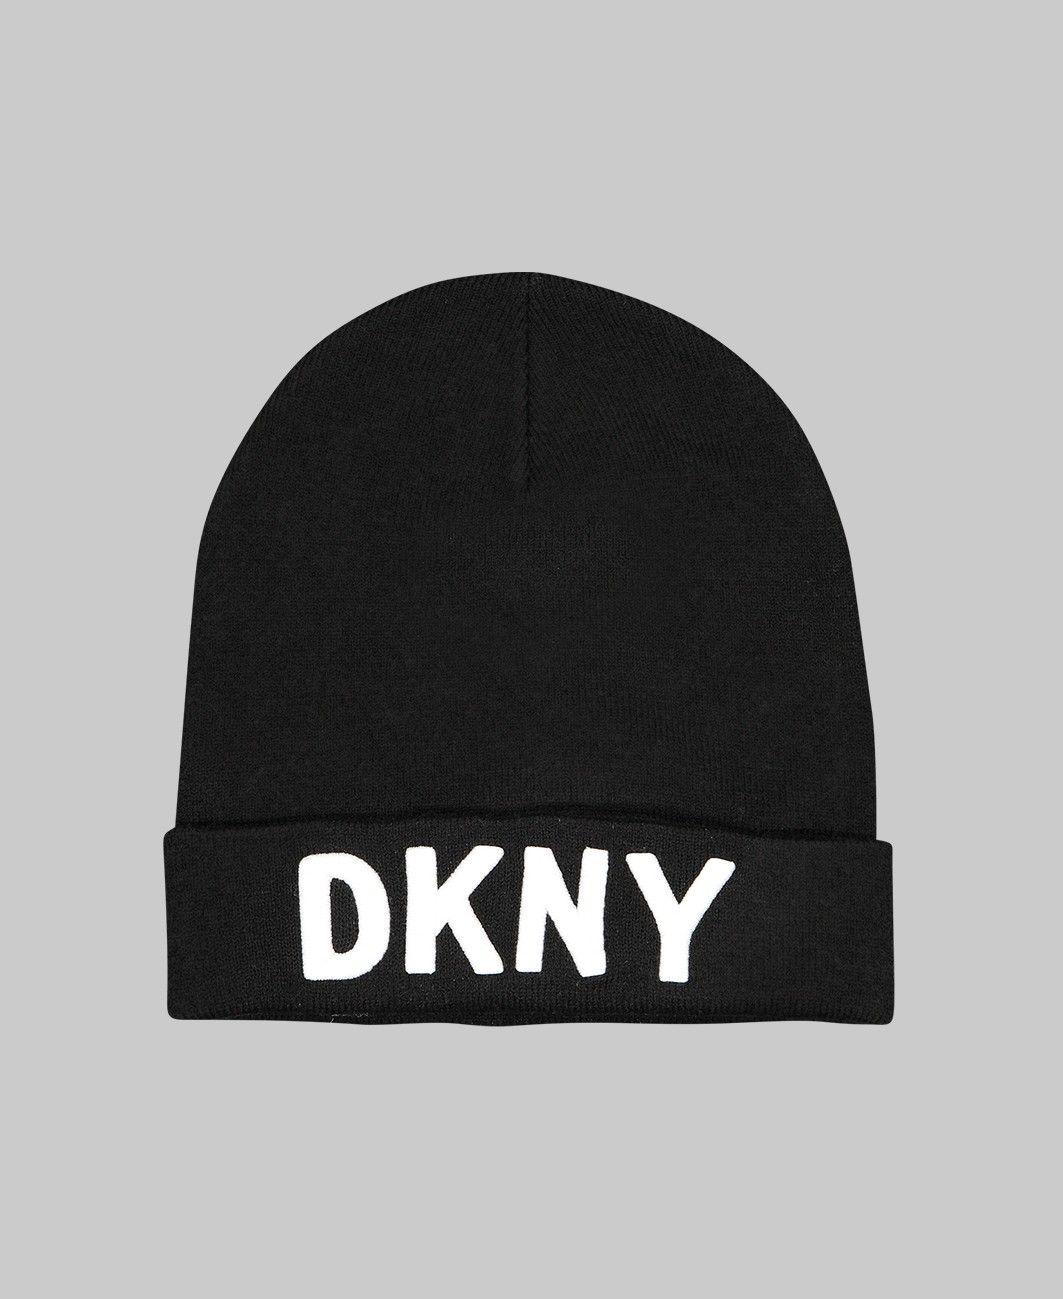 DKNY Logo - DKNY - Logo Beanie Hat - Black